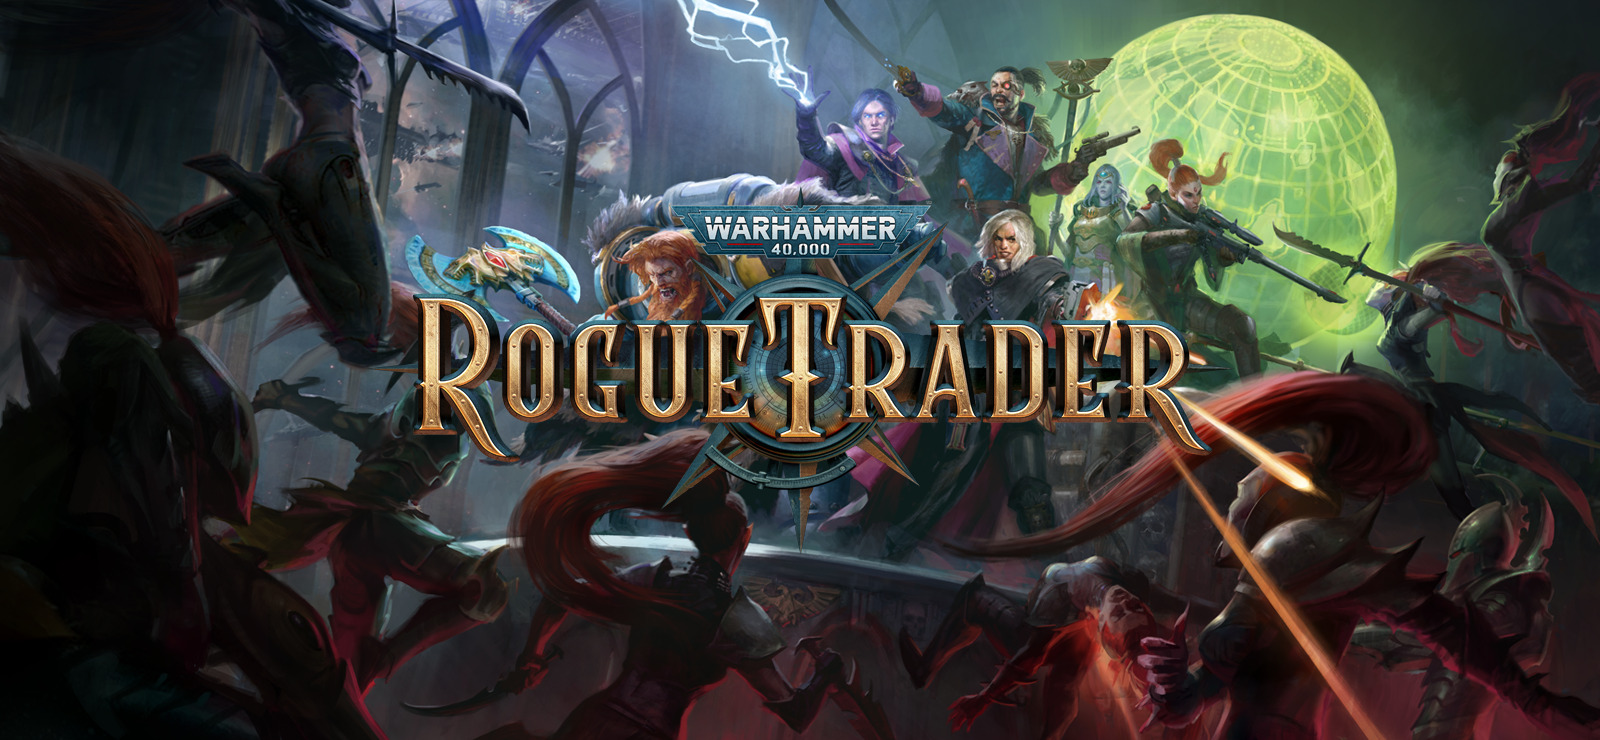 Warhammer 000: Rogue Trader